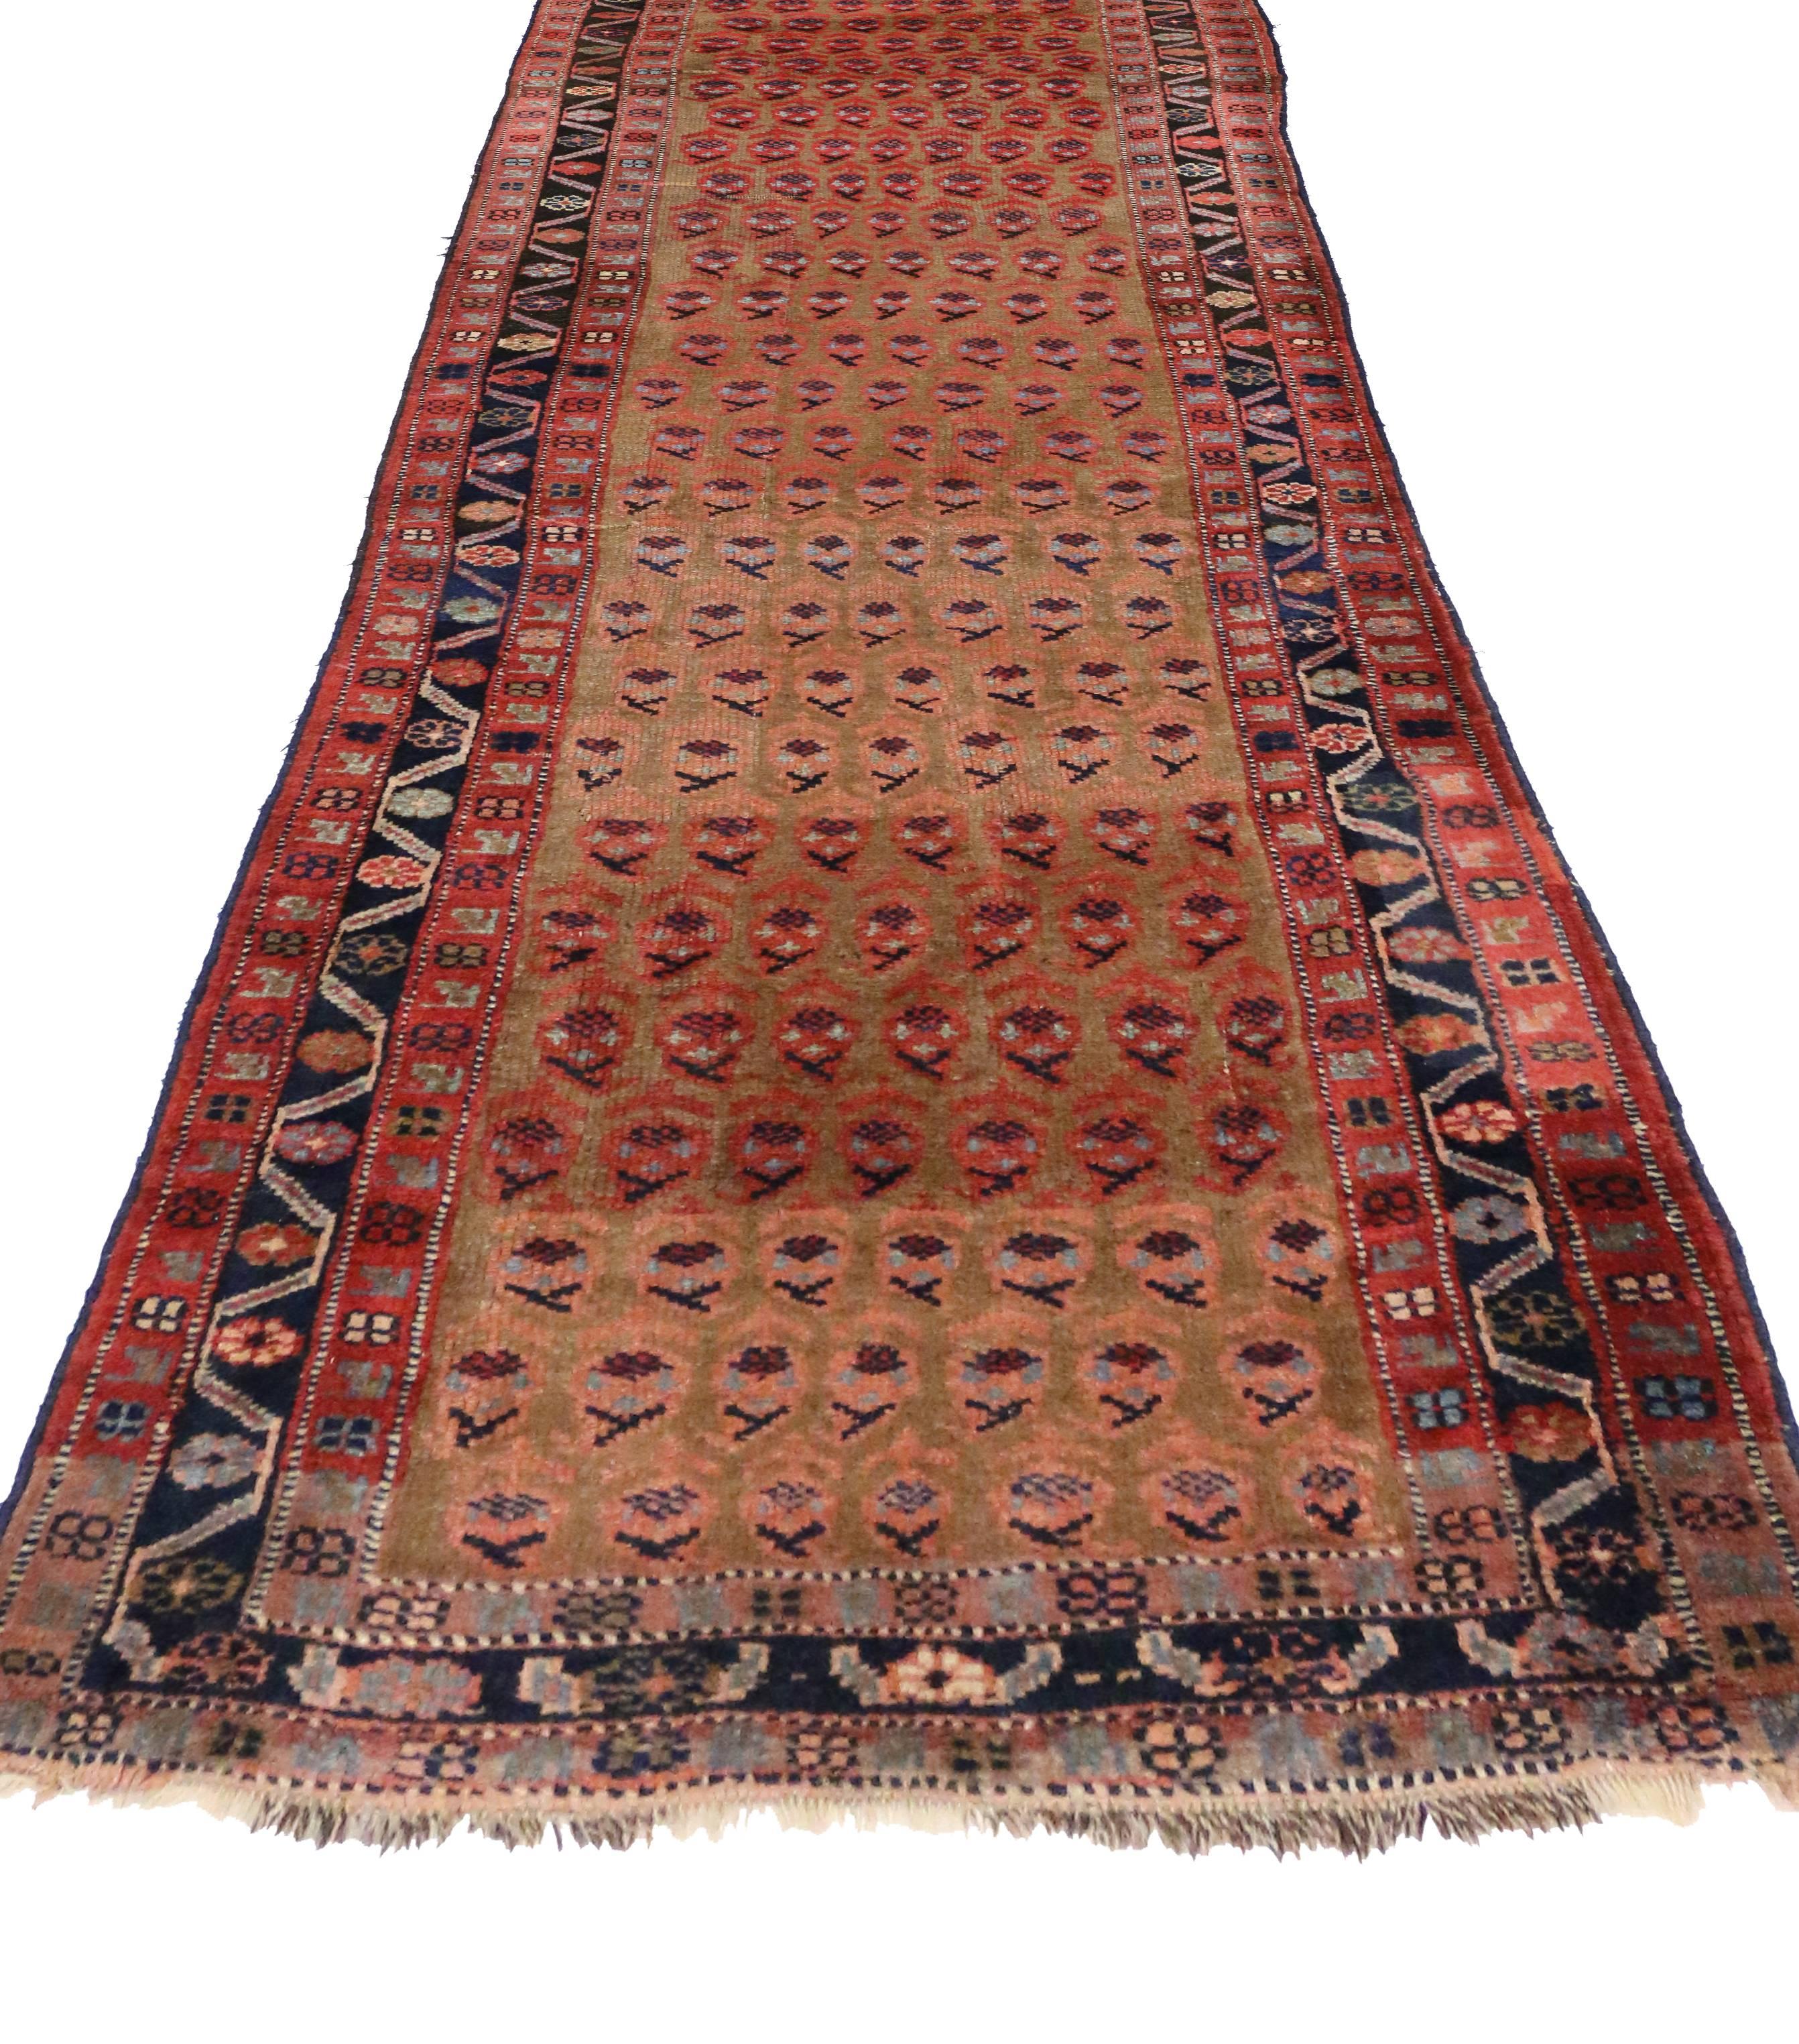 Malayer Late 19th Century Antique Persian Kurd Carpet Runner, Long Persian Runner